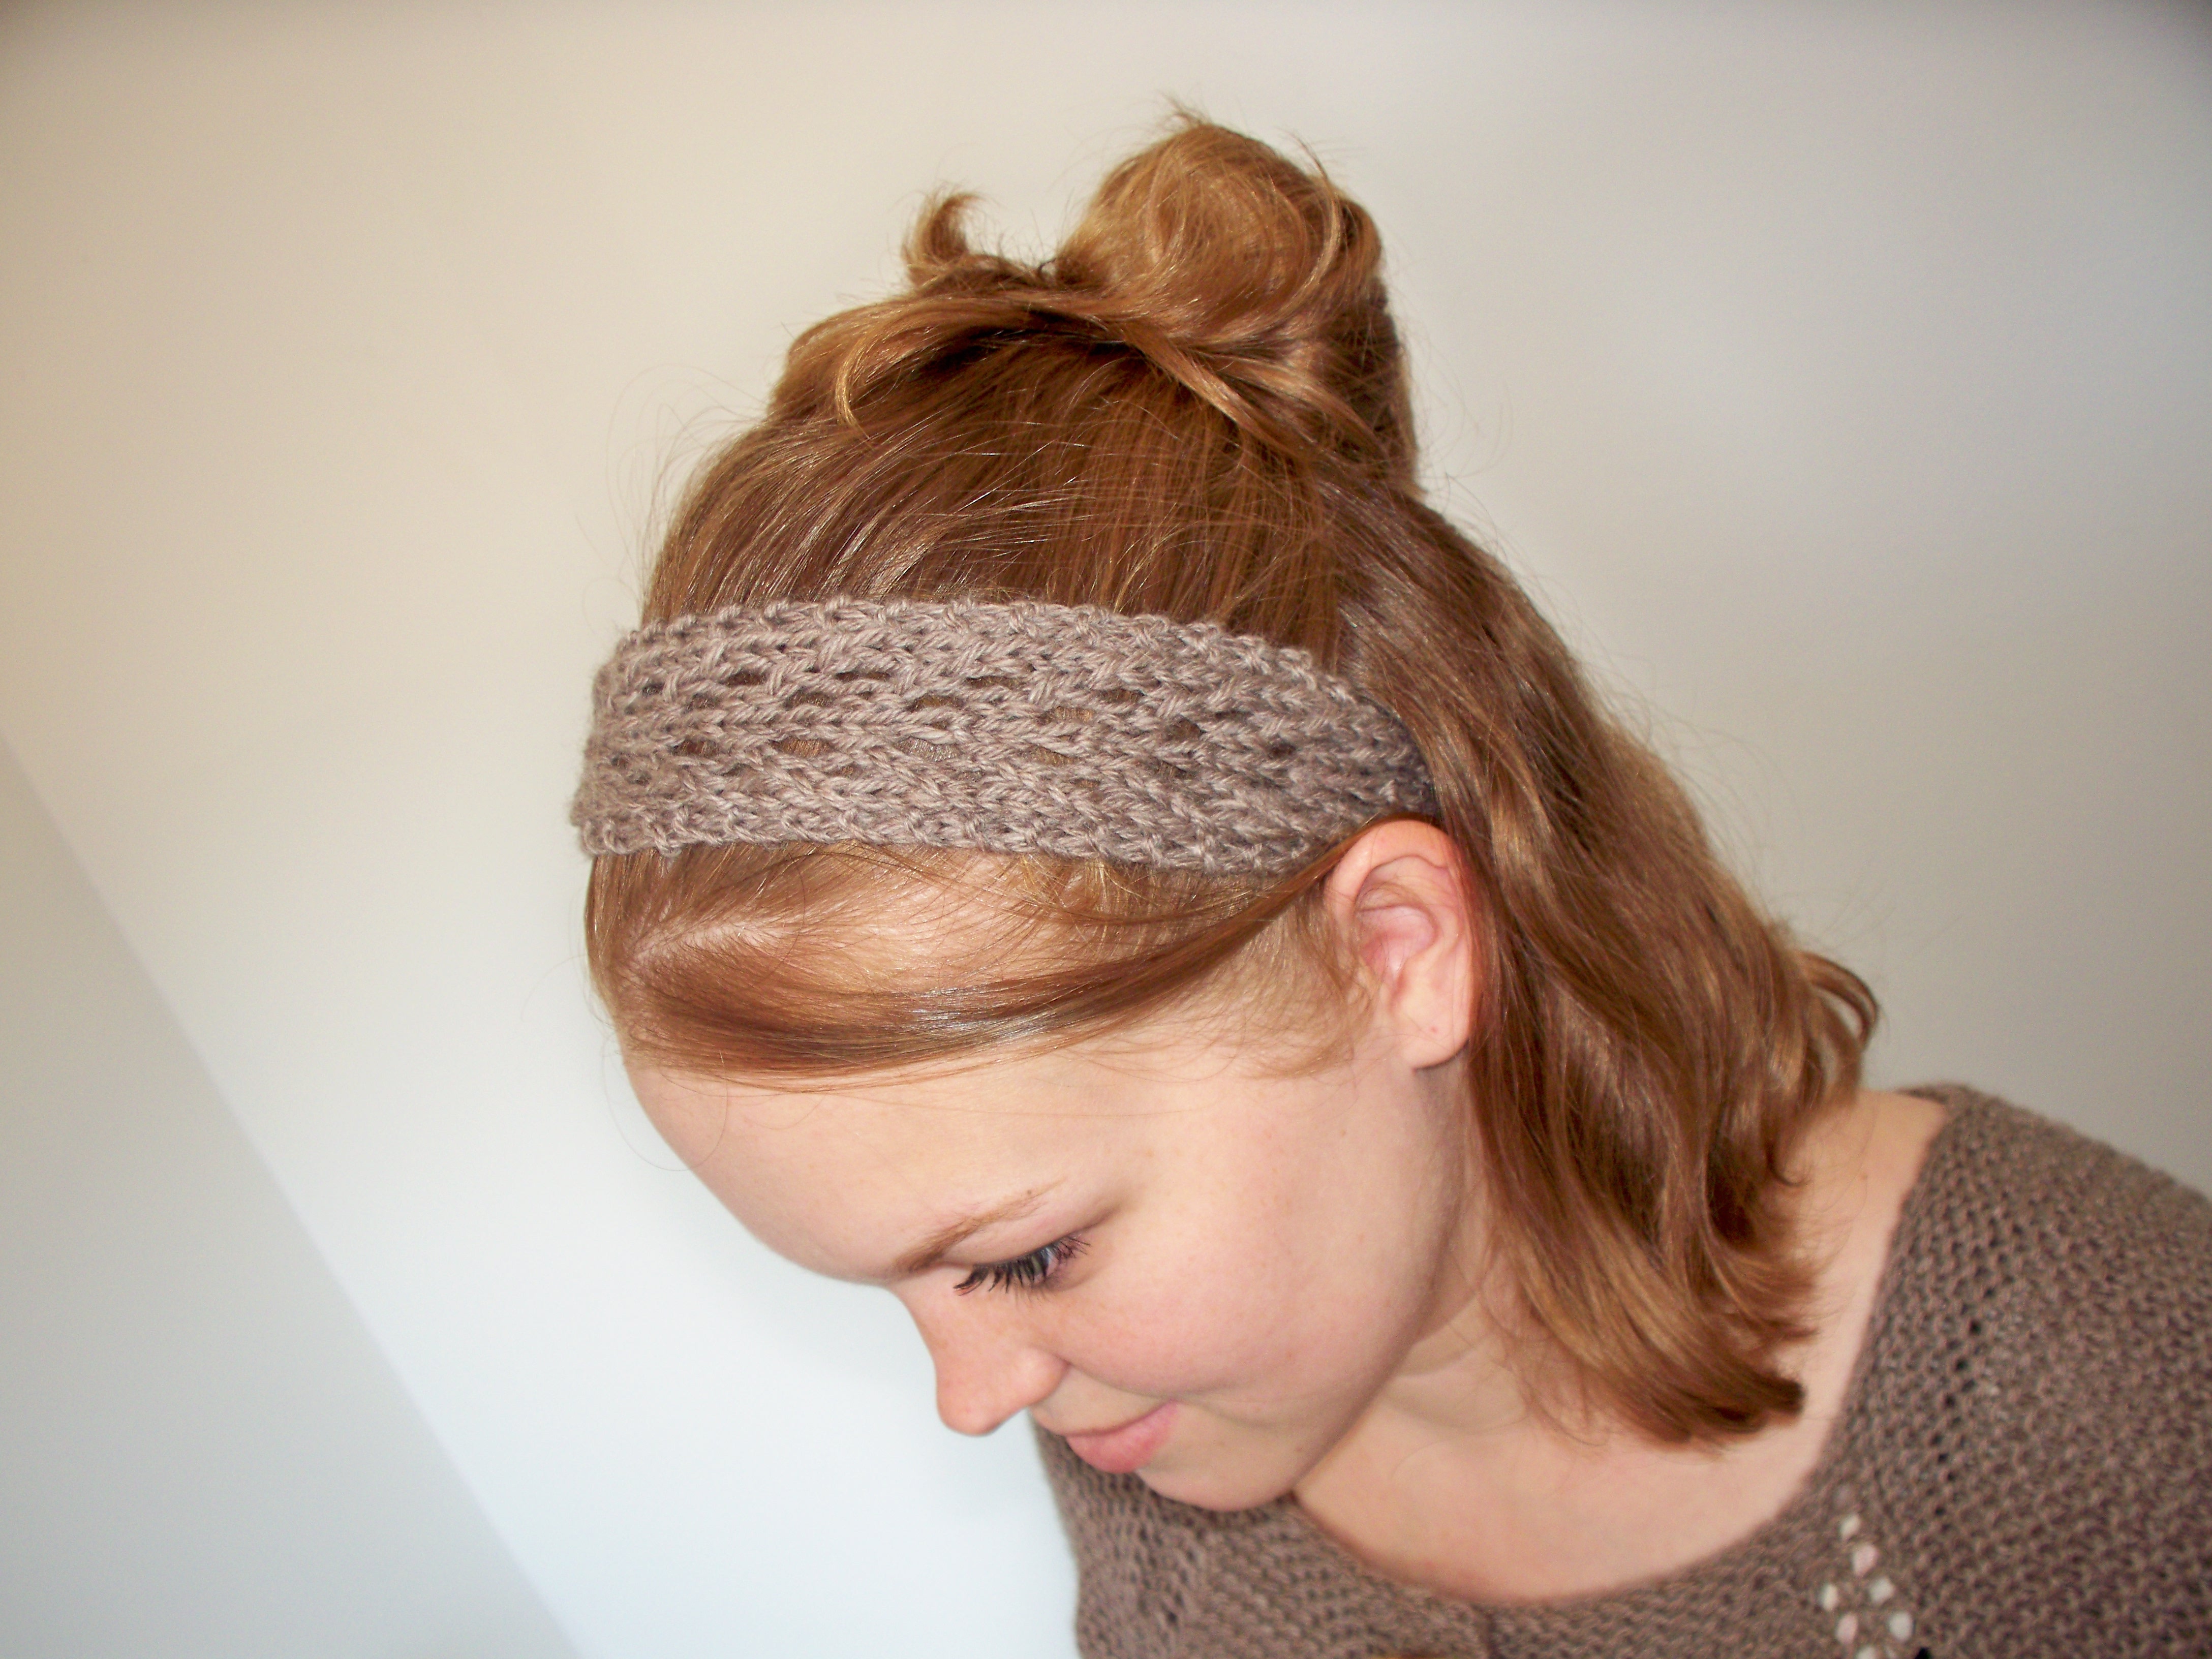 February lady lace headband